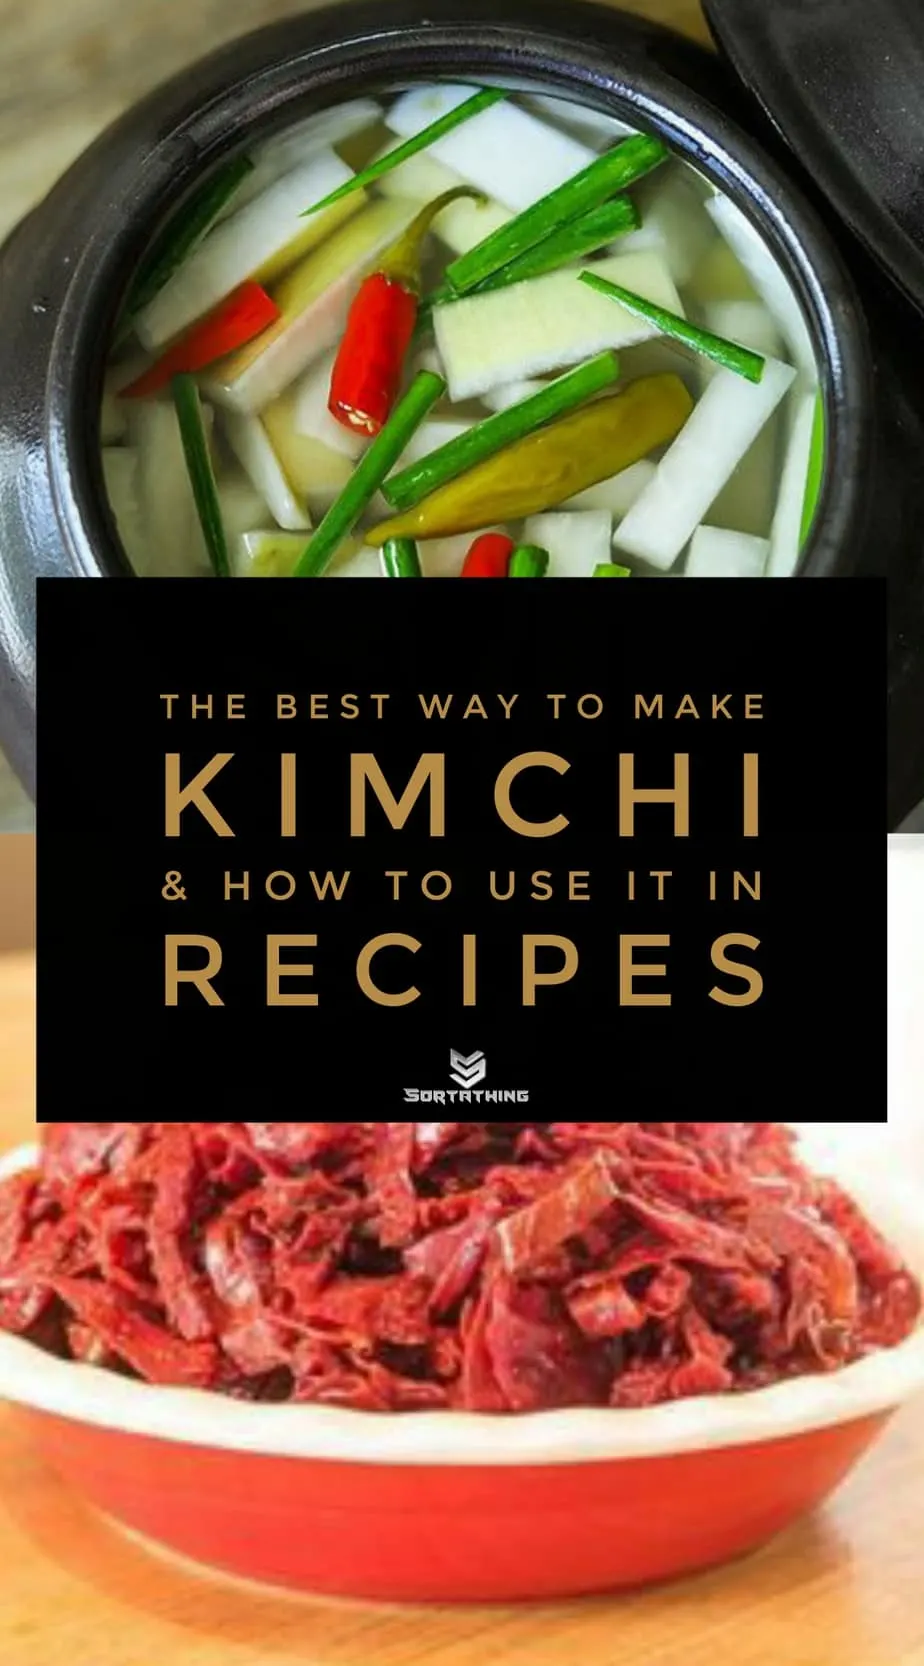 Dongchimi Korean Vegan Water Kimchi and Red Cabbage Kimchi